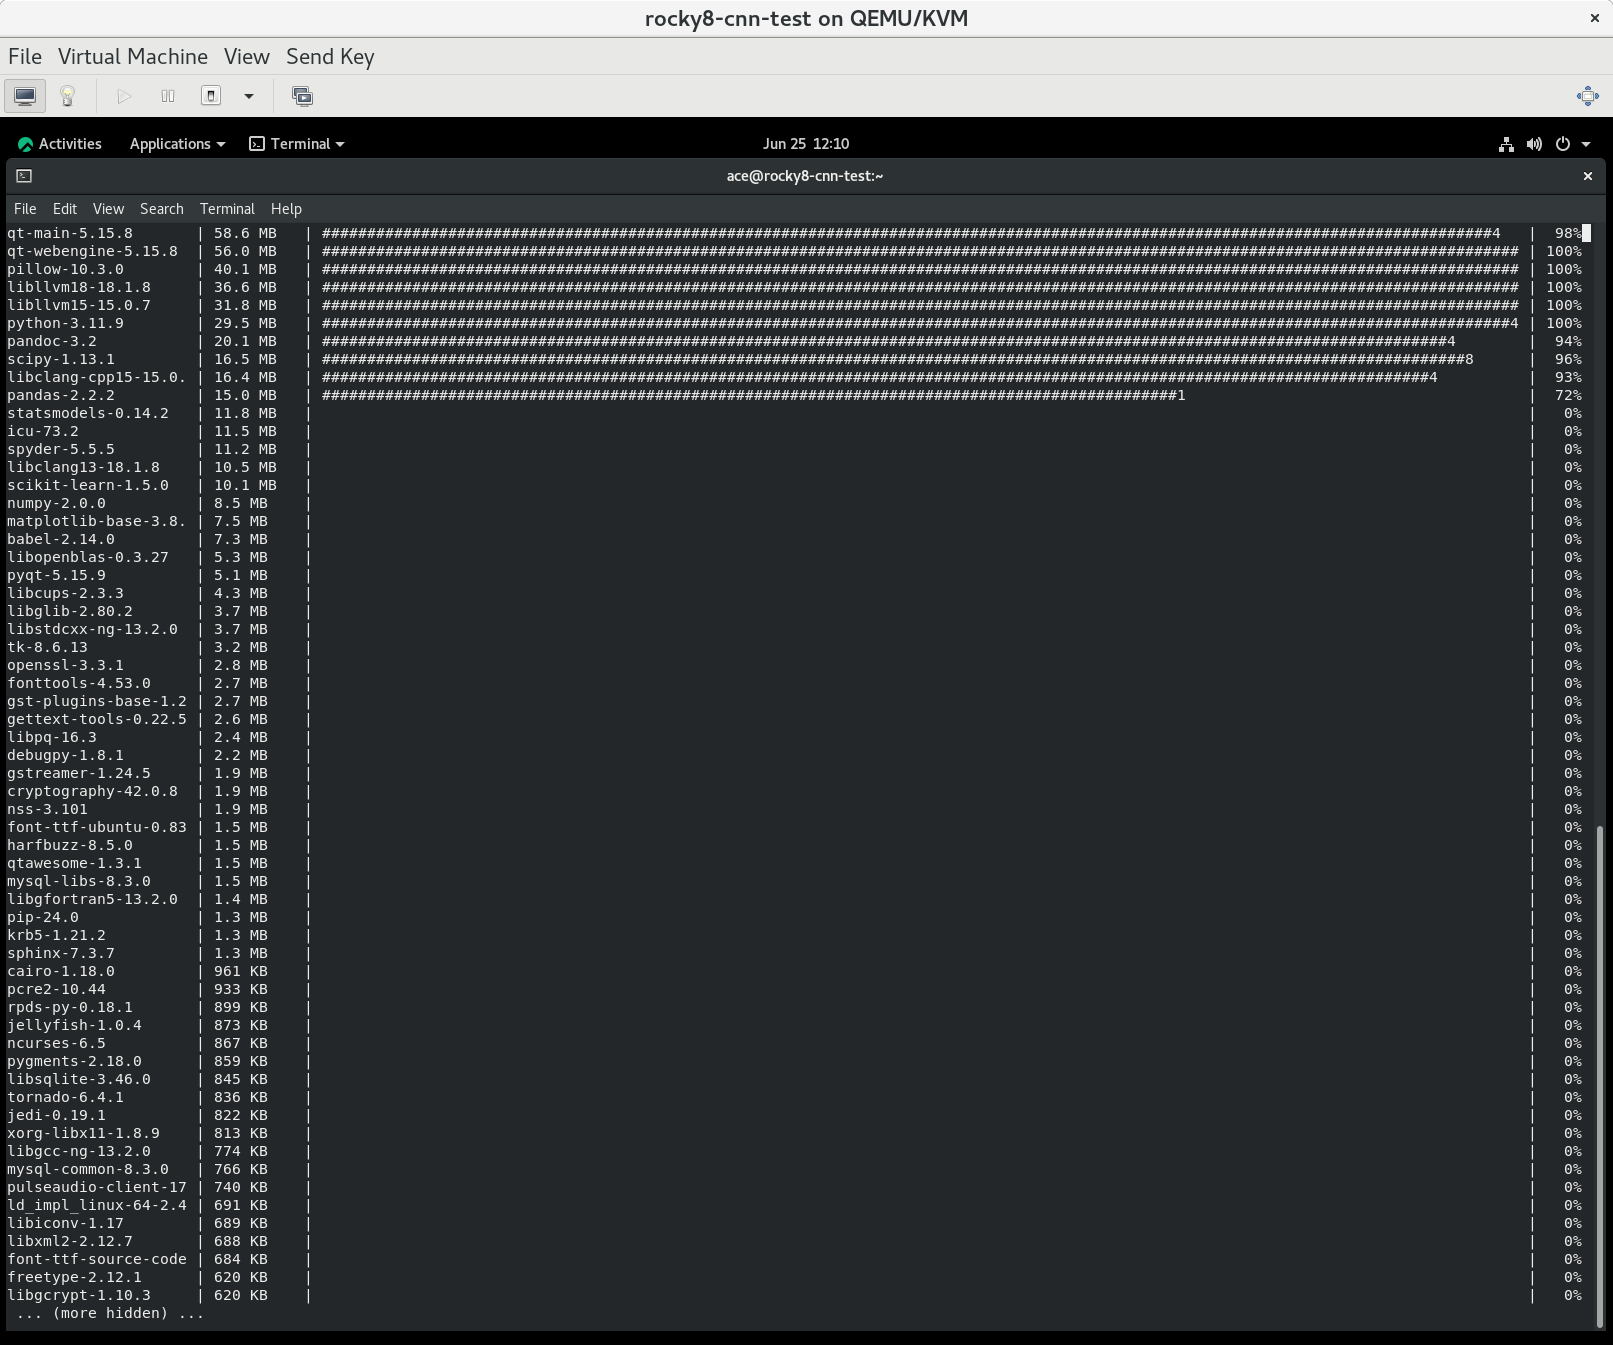 Screenshot of creating conda enviroment on a Linux.